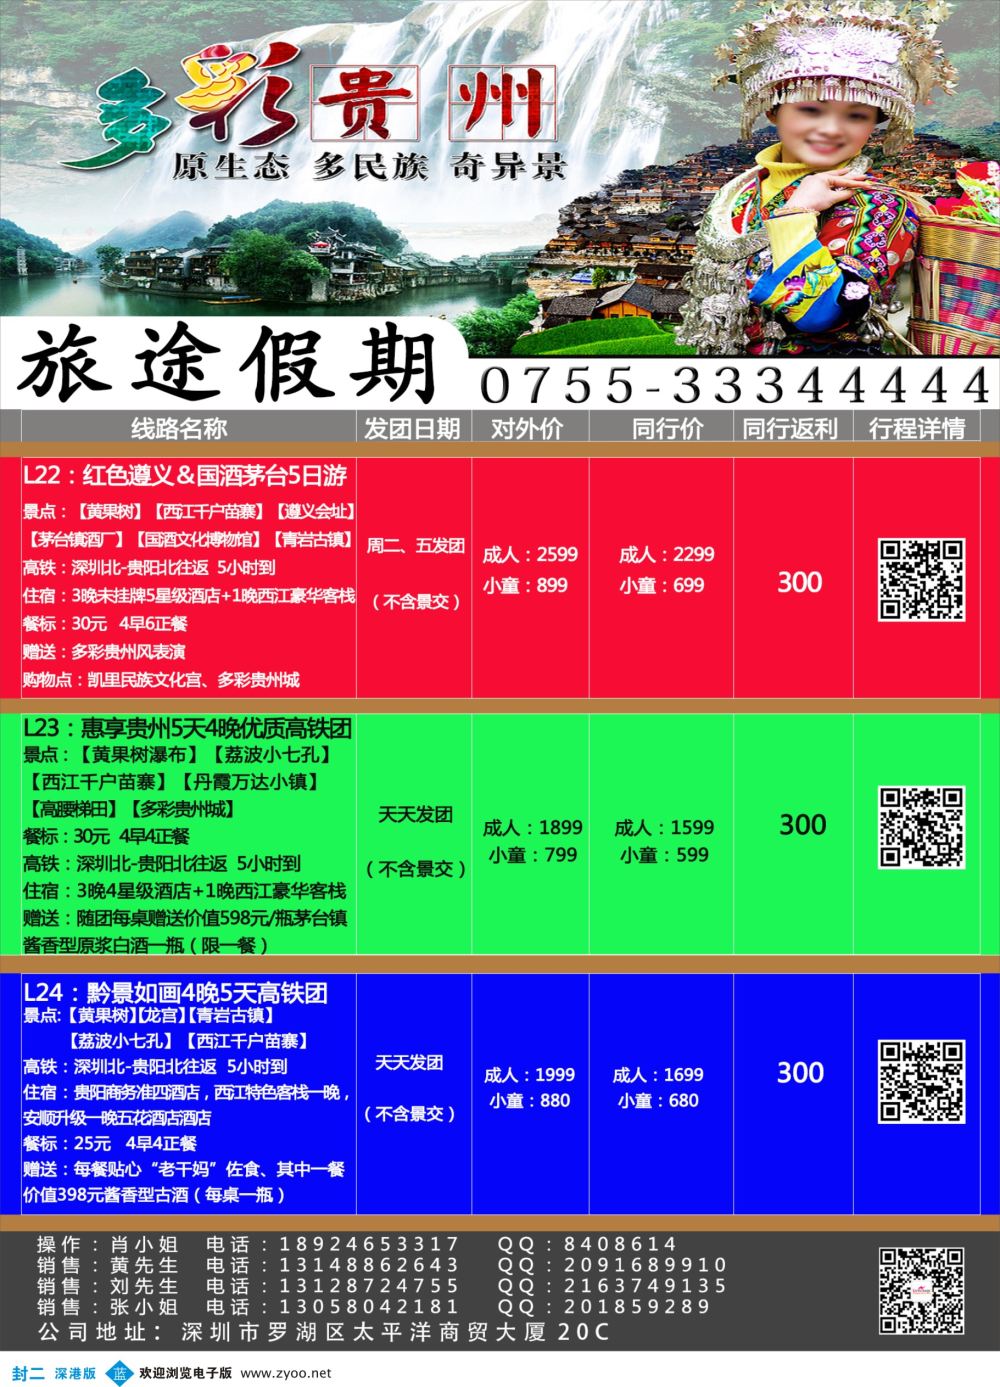 b2  封二  旅途假期-特惠贵州专线